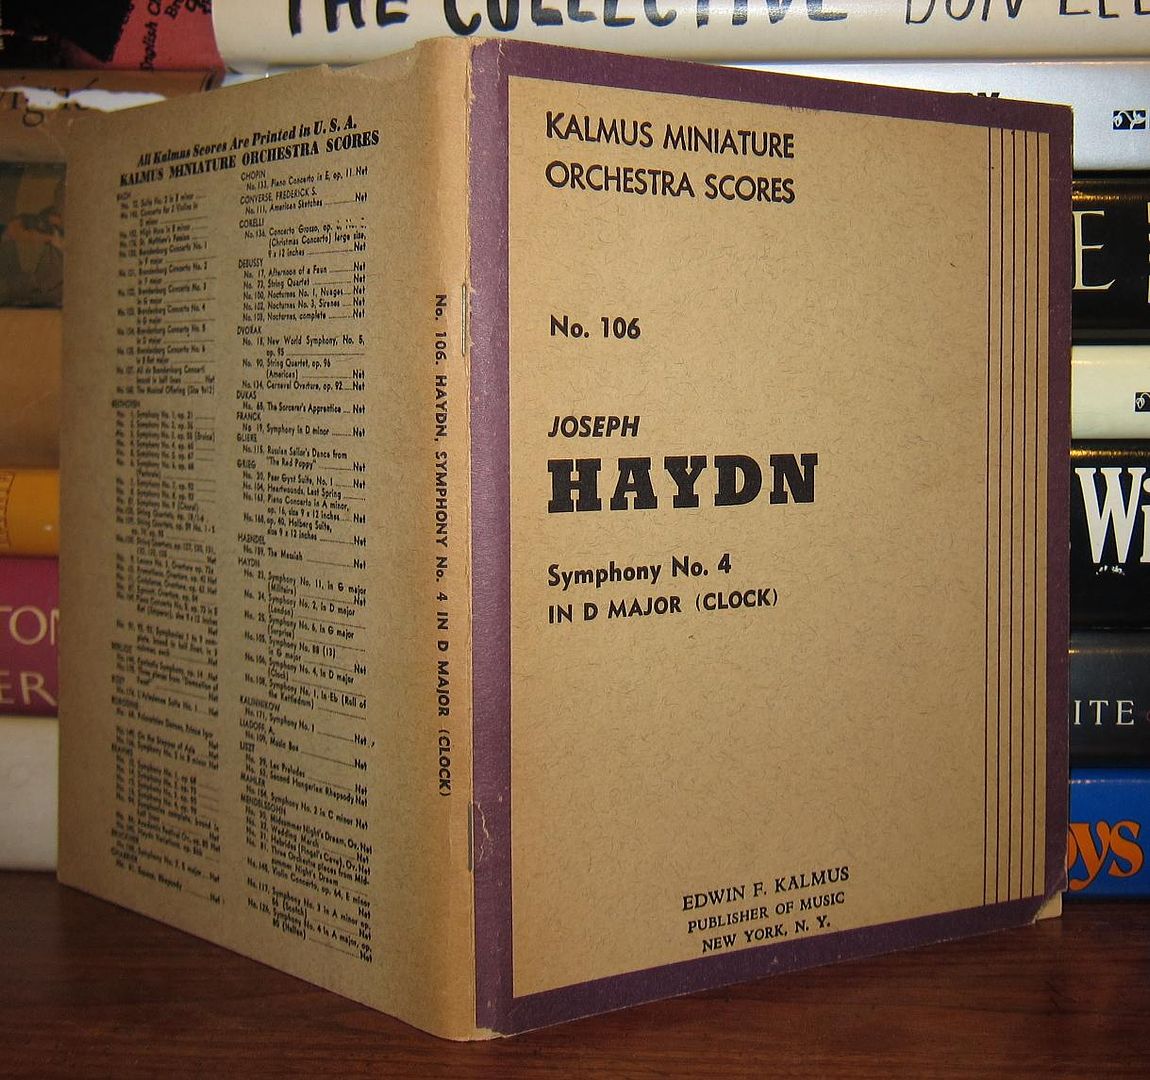 HADYN, JOSEPH - Joseph Haydn; Symphony No. 4 in D Major (Clock) Kalmus Miniature Orchestra Scores